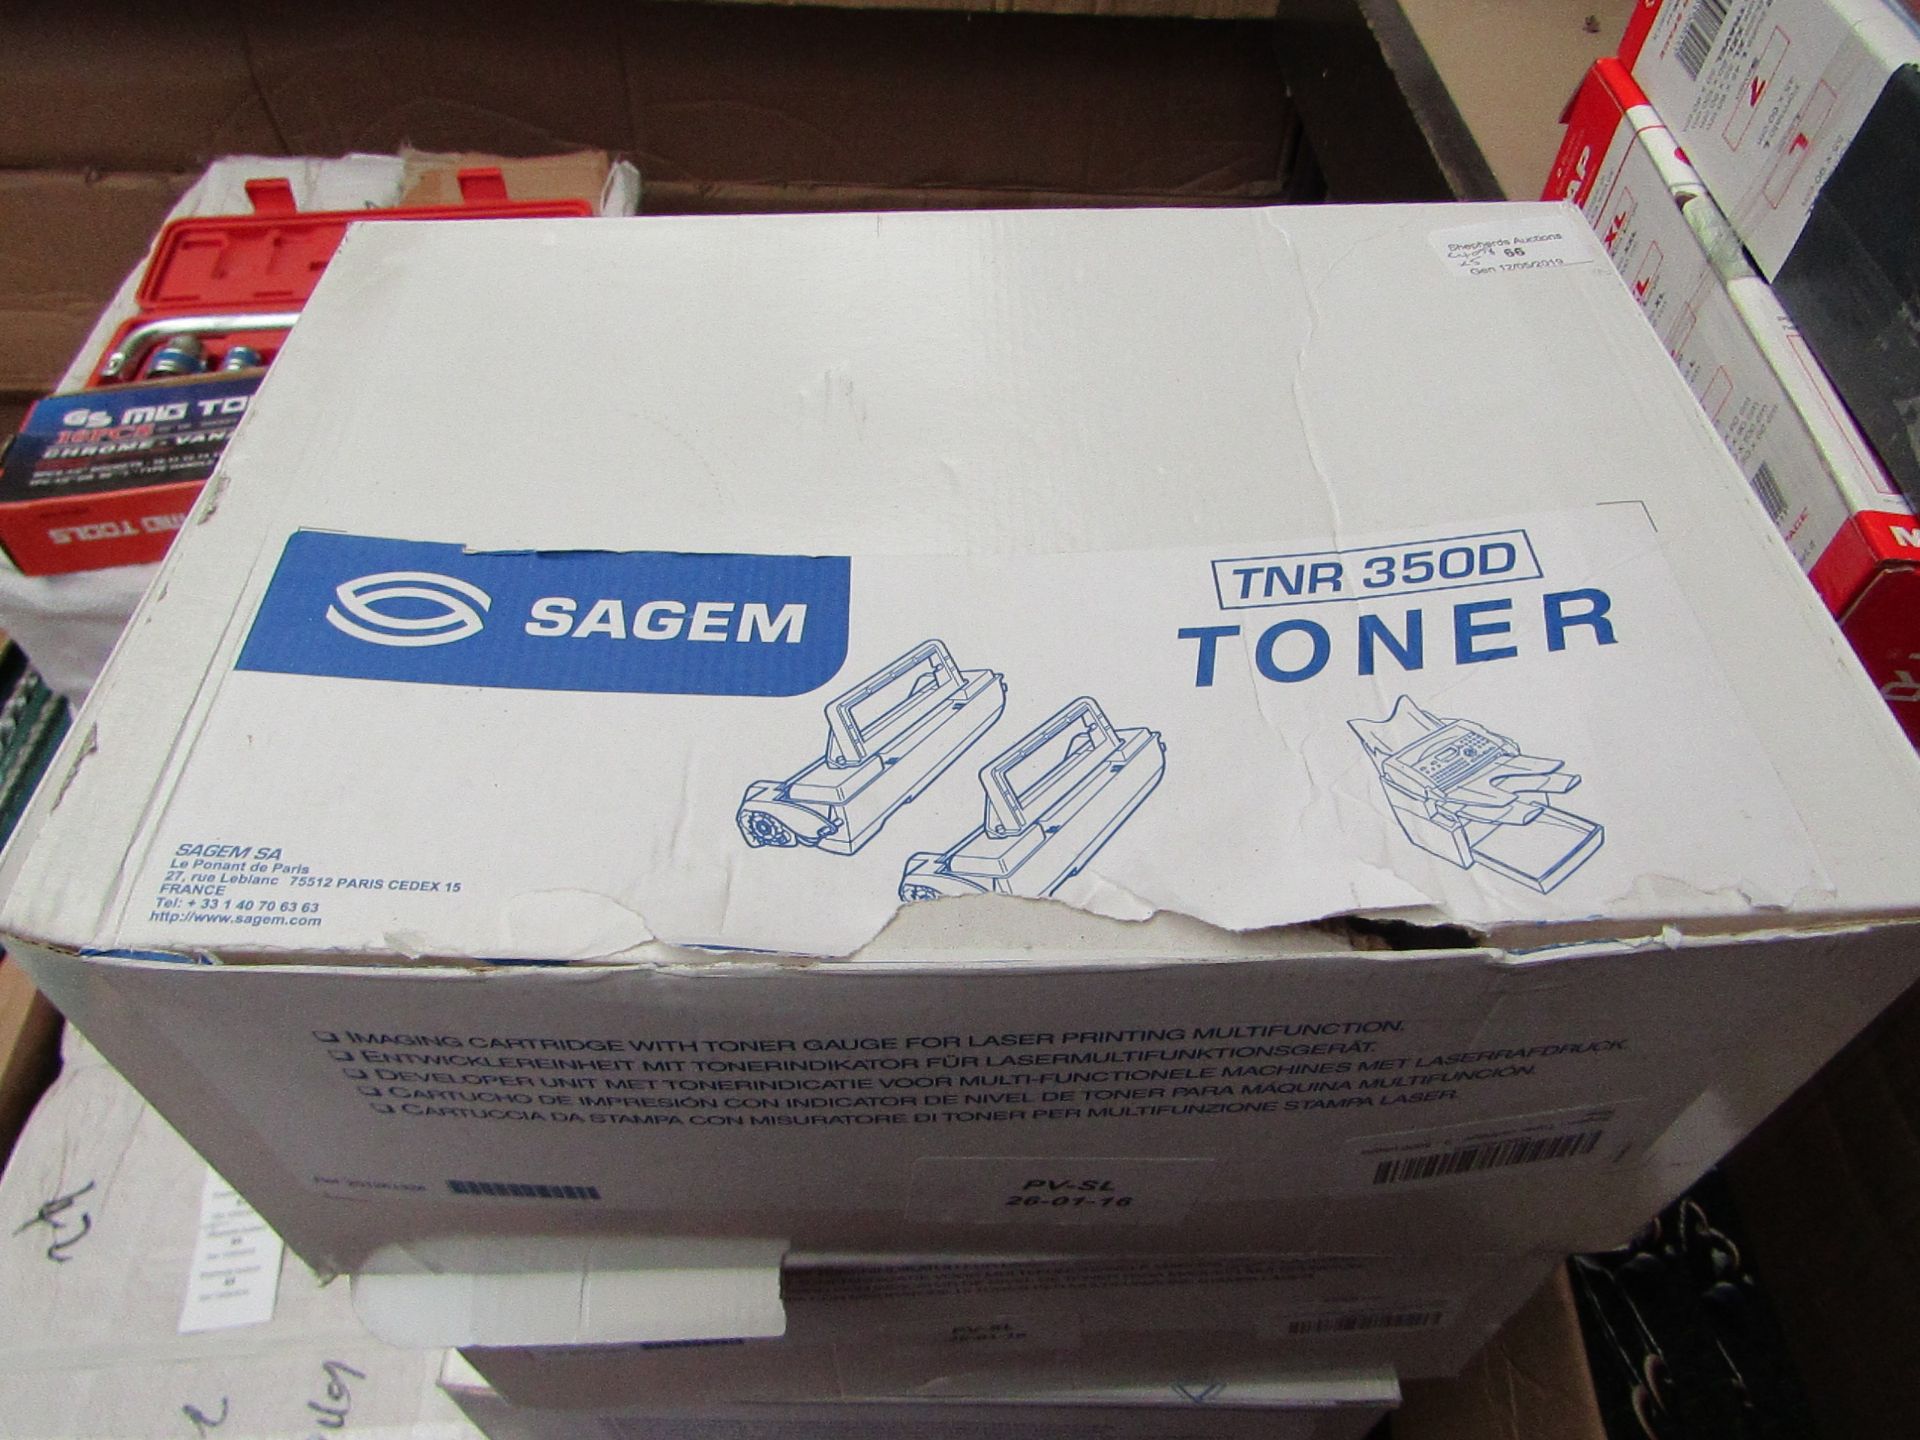 5 x Boxes of Sagem TNR 350D Toners pv-sl 26-01-16, new in box